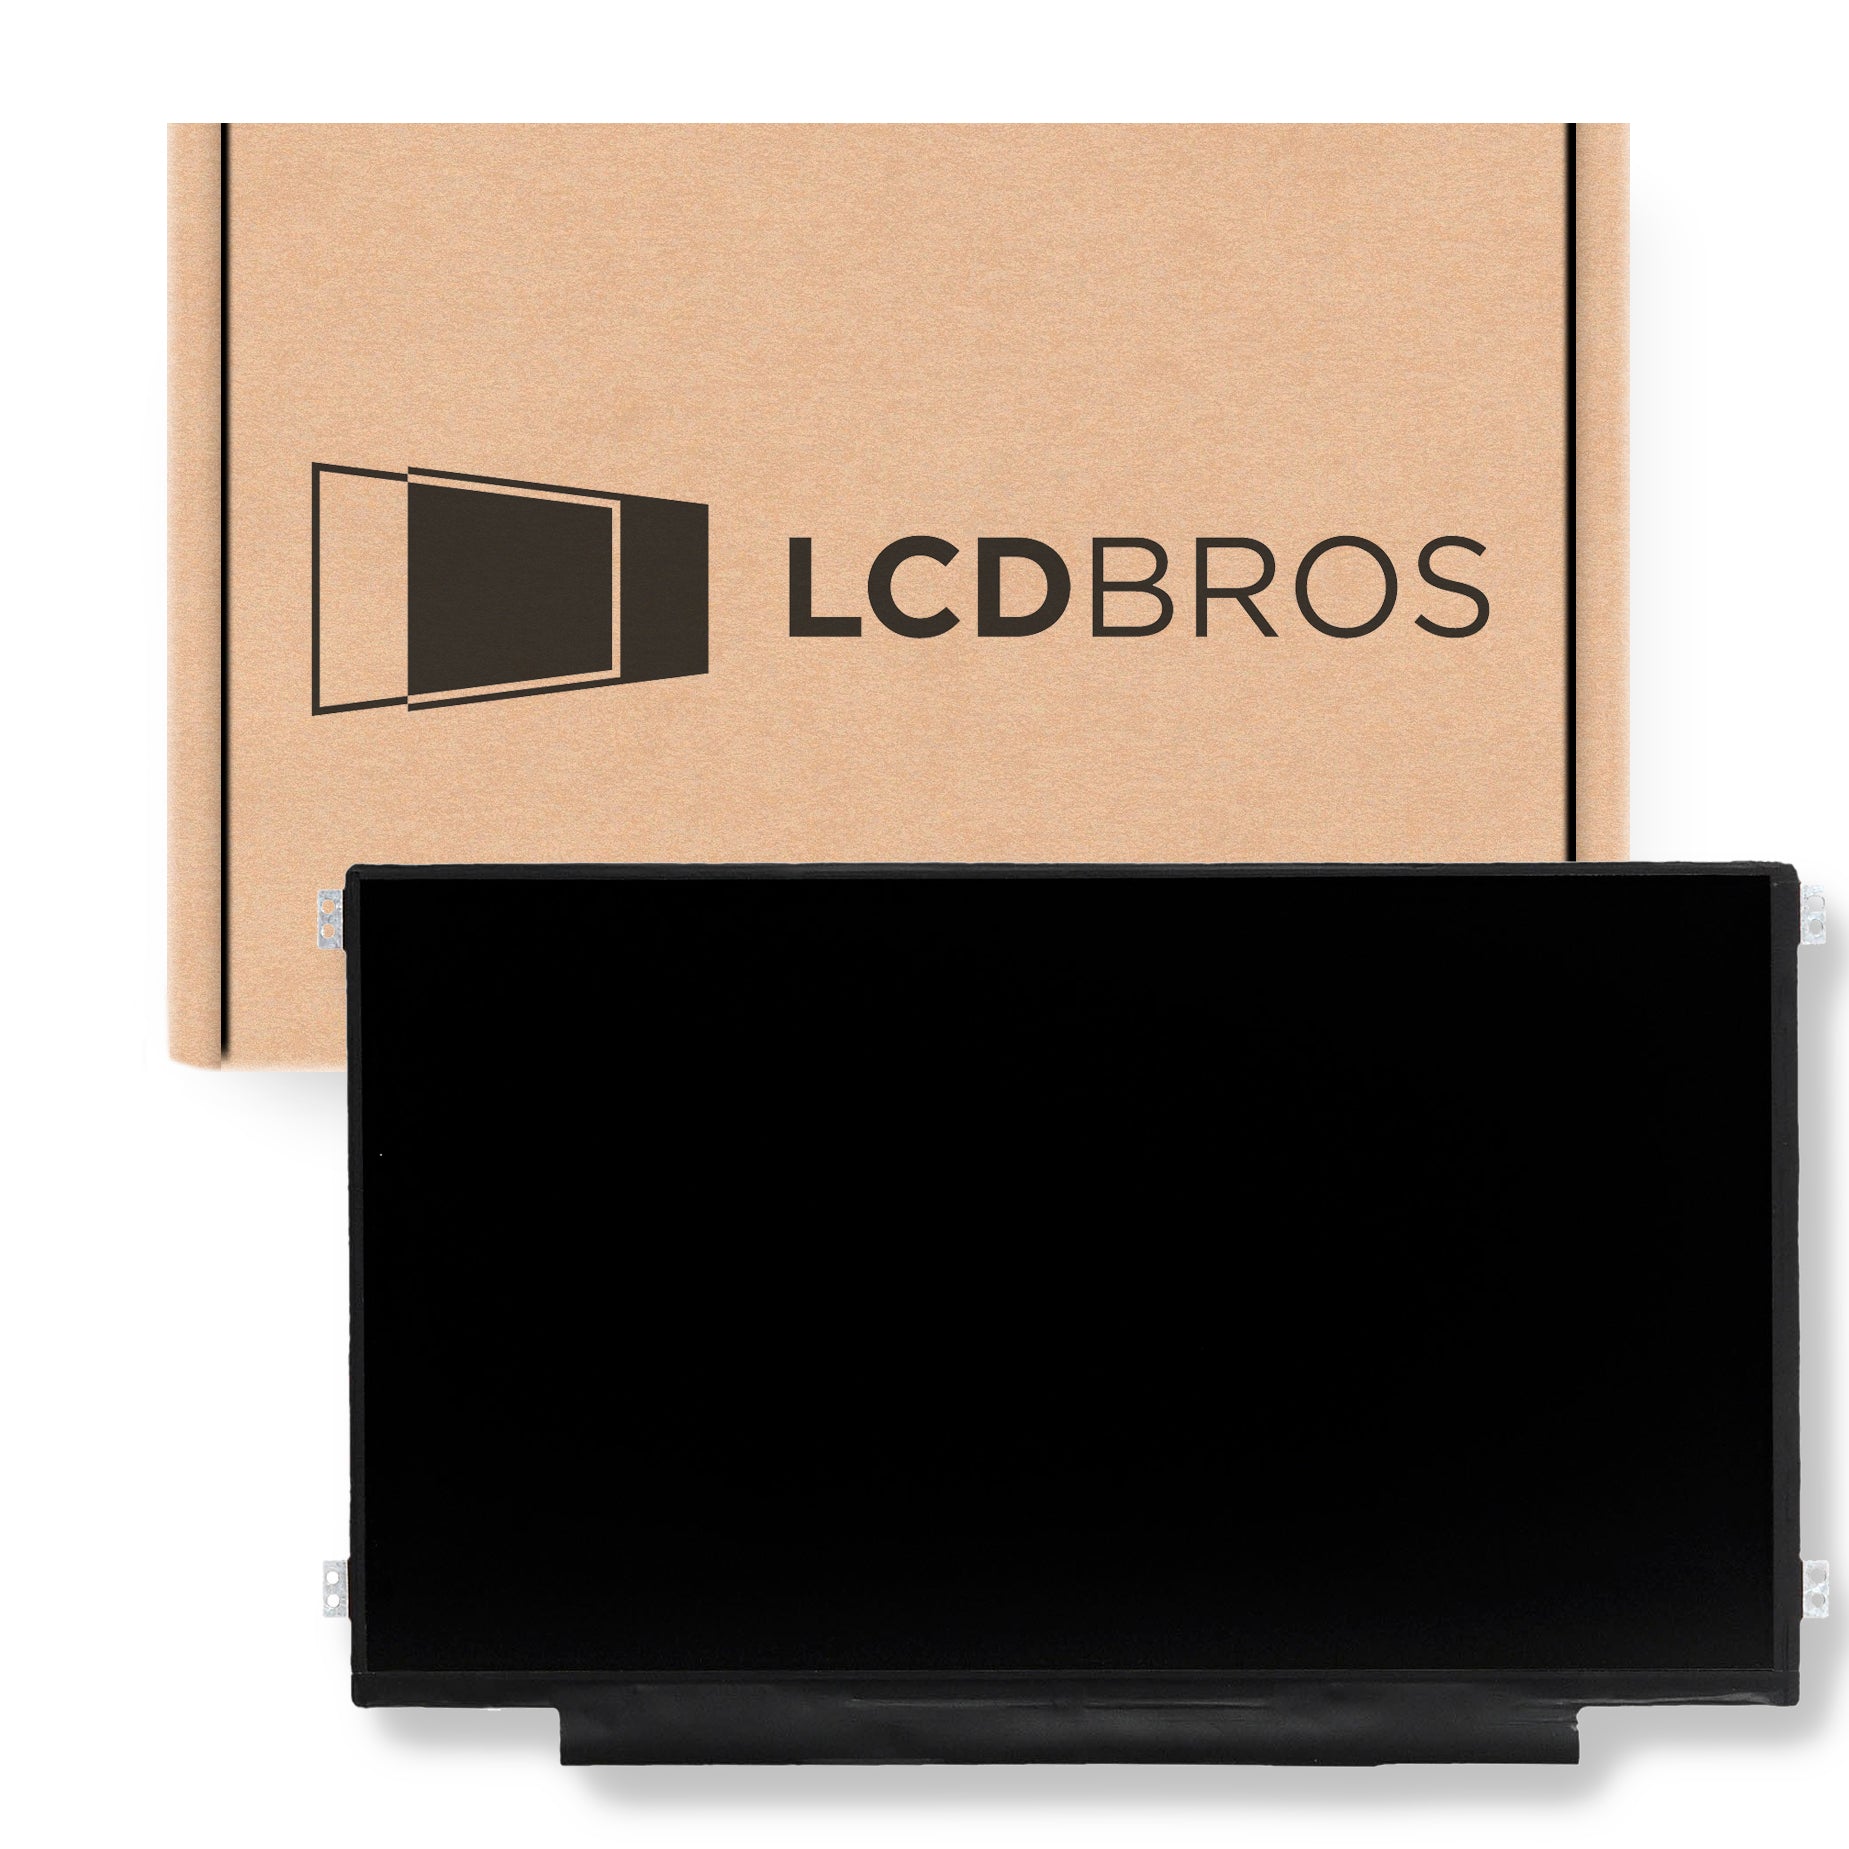 LENOVO IDEAPAD S200 S206 U130 U150 U160 U165 11.6 WXGA HD Slim Glossy LED LCD Screen/display